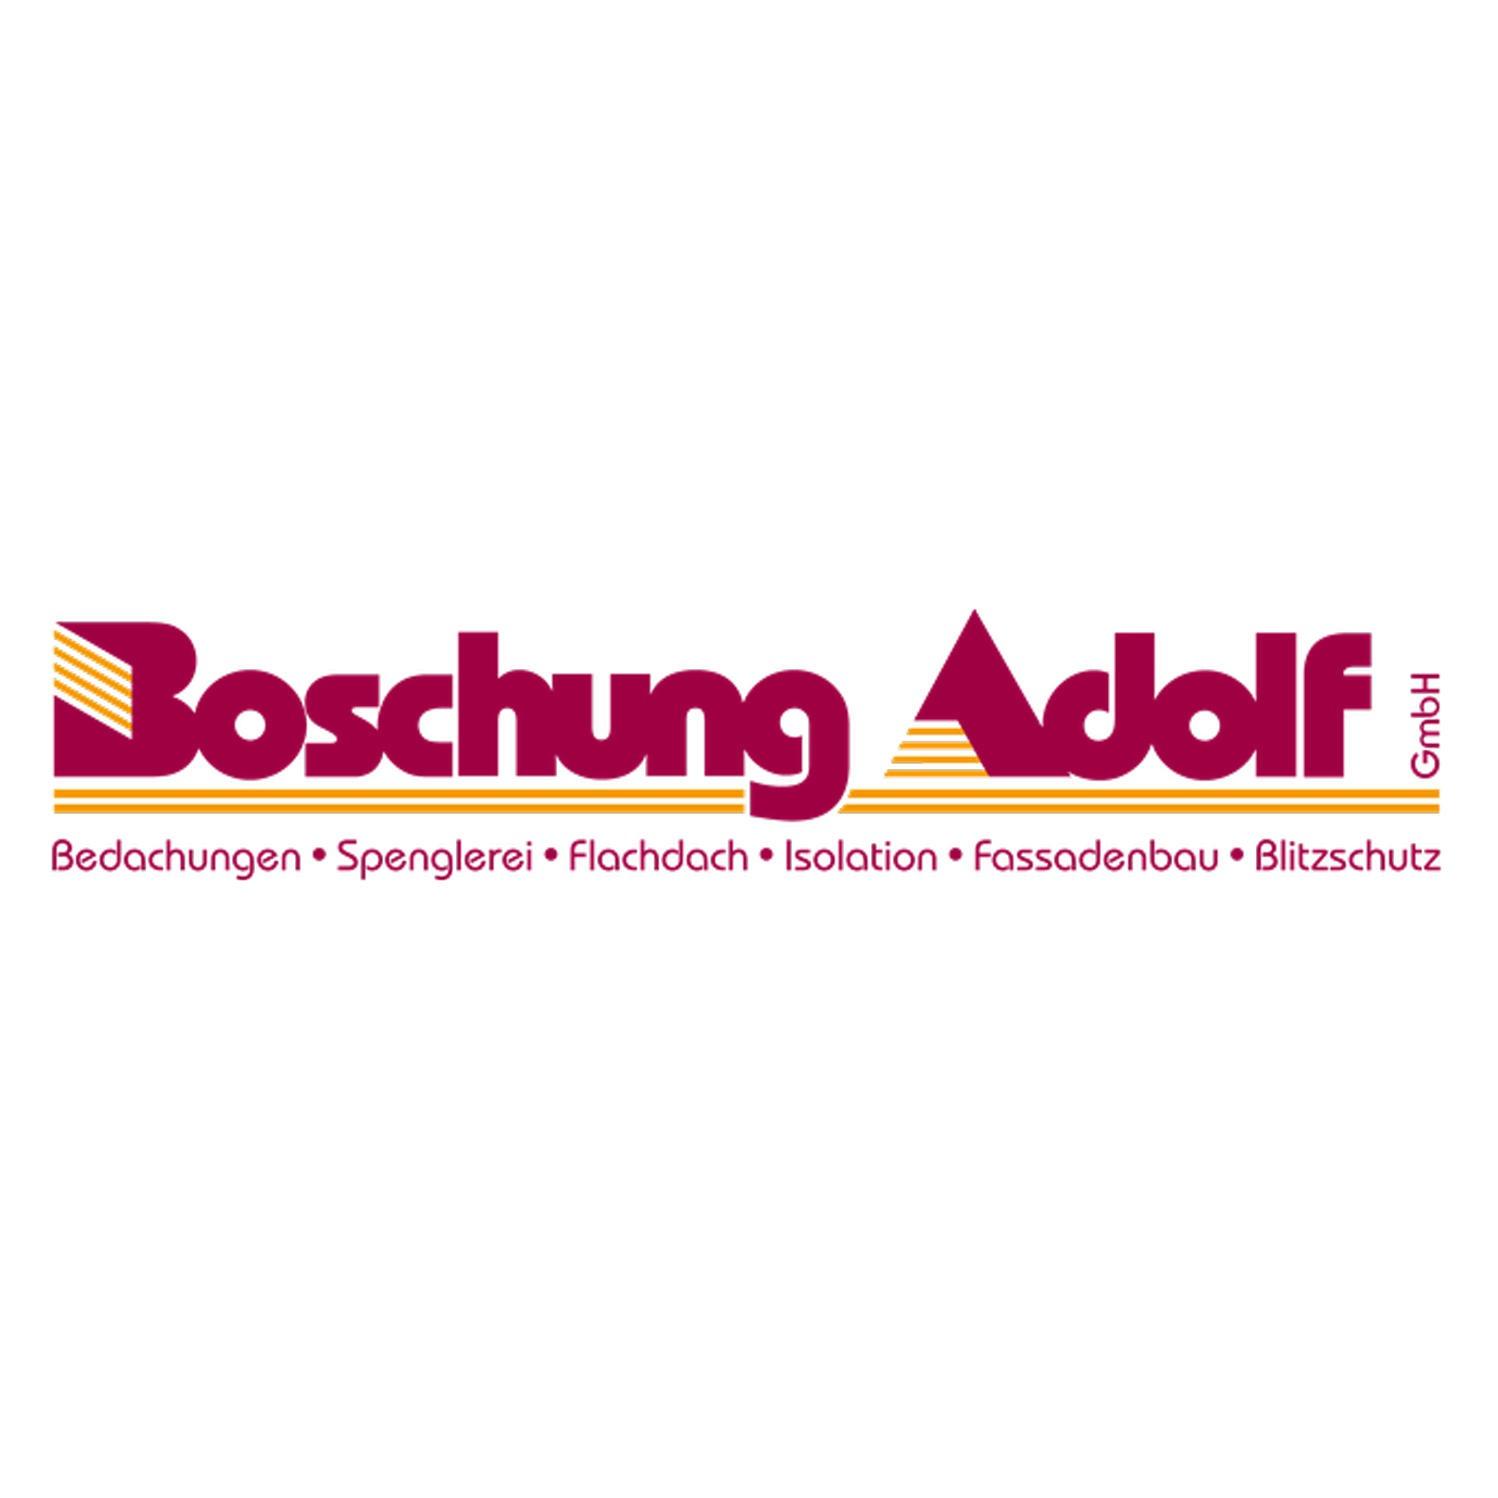 Boschung Adolf GmbH Logo